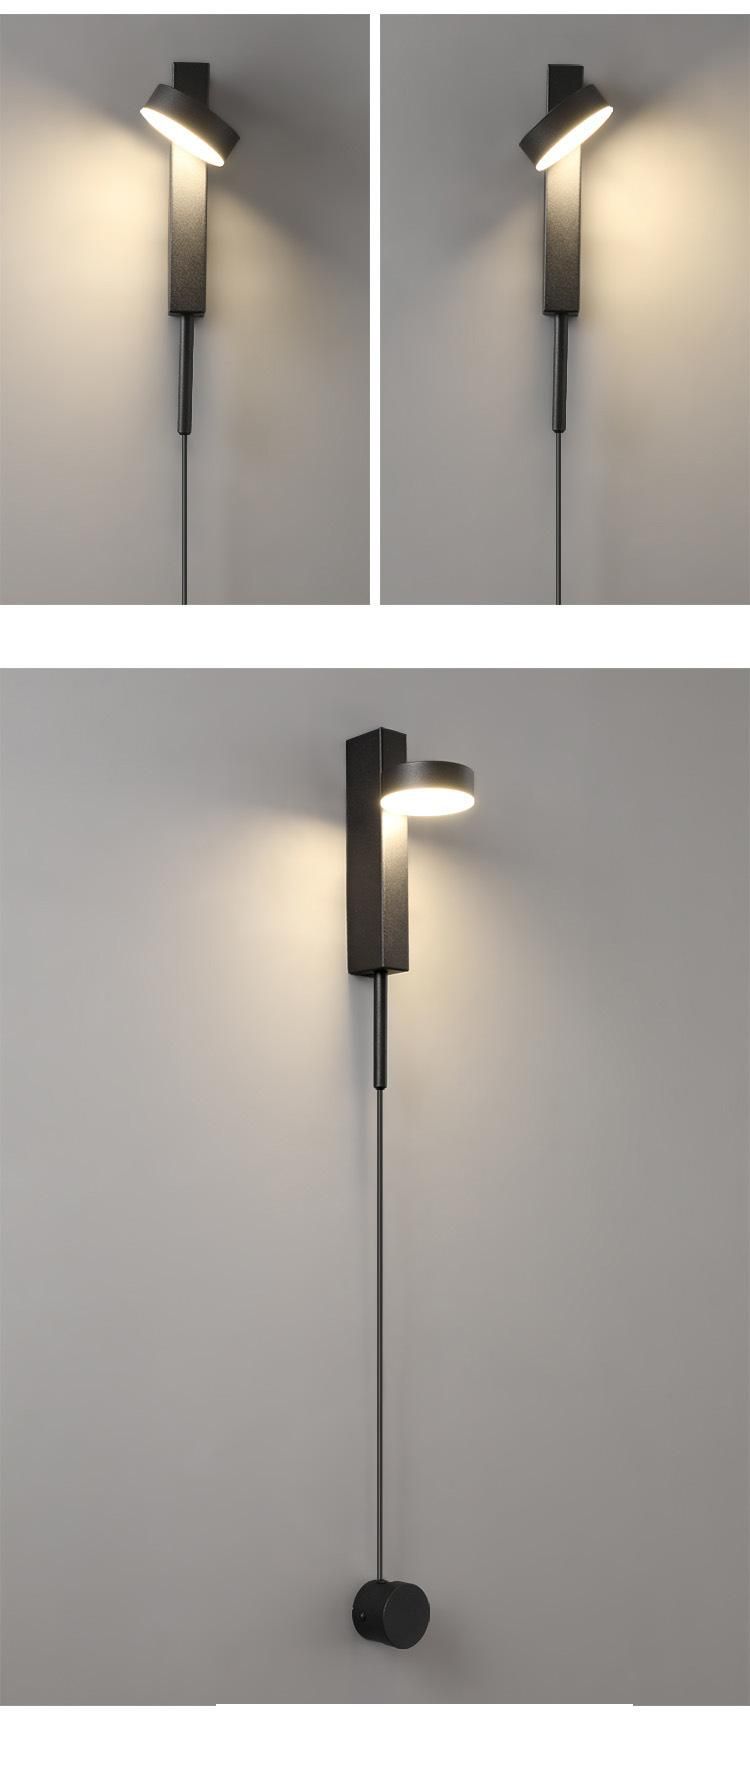 Adjustable Direction Wall Lamp